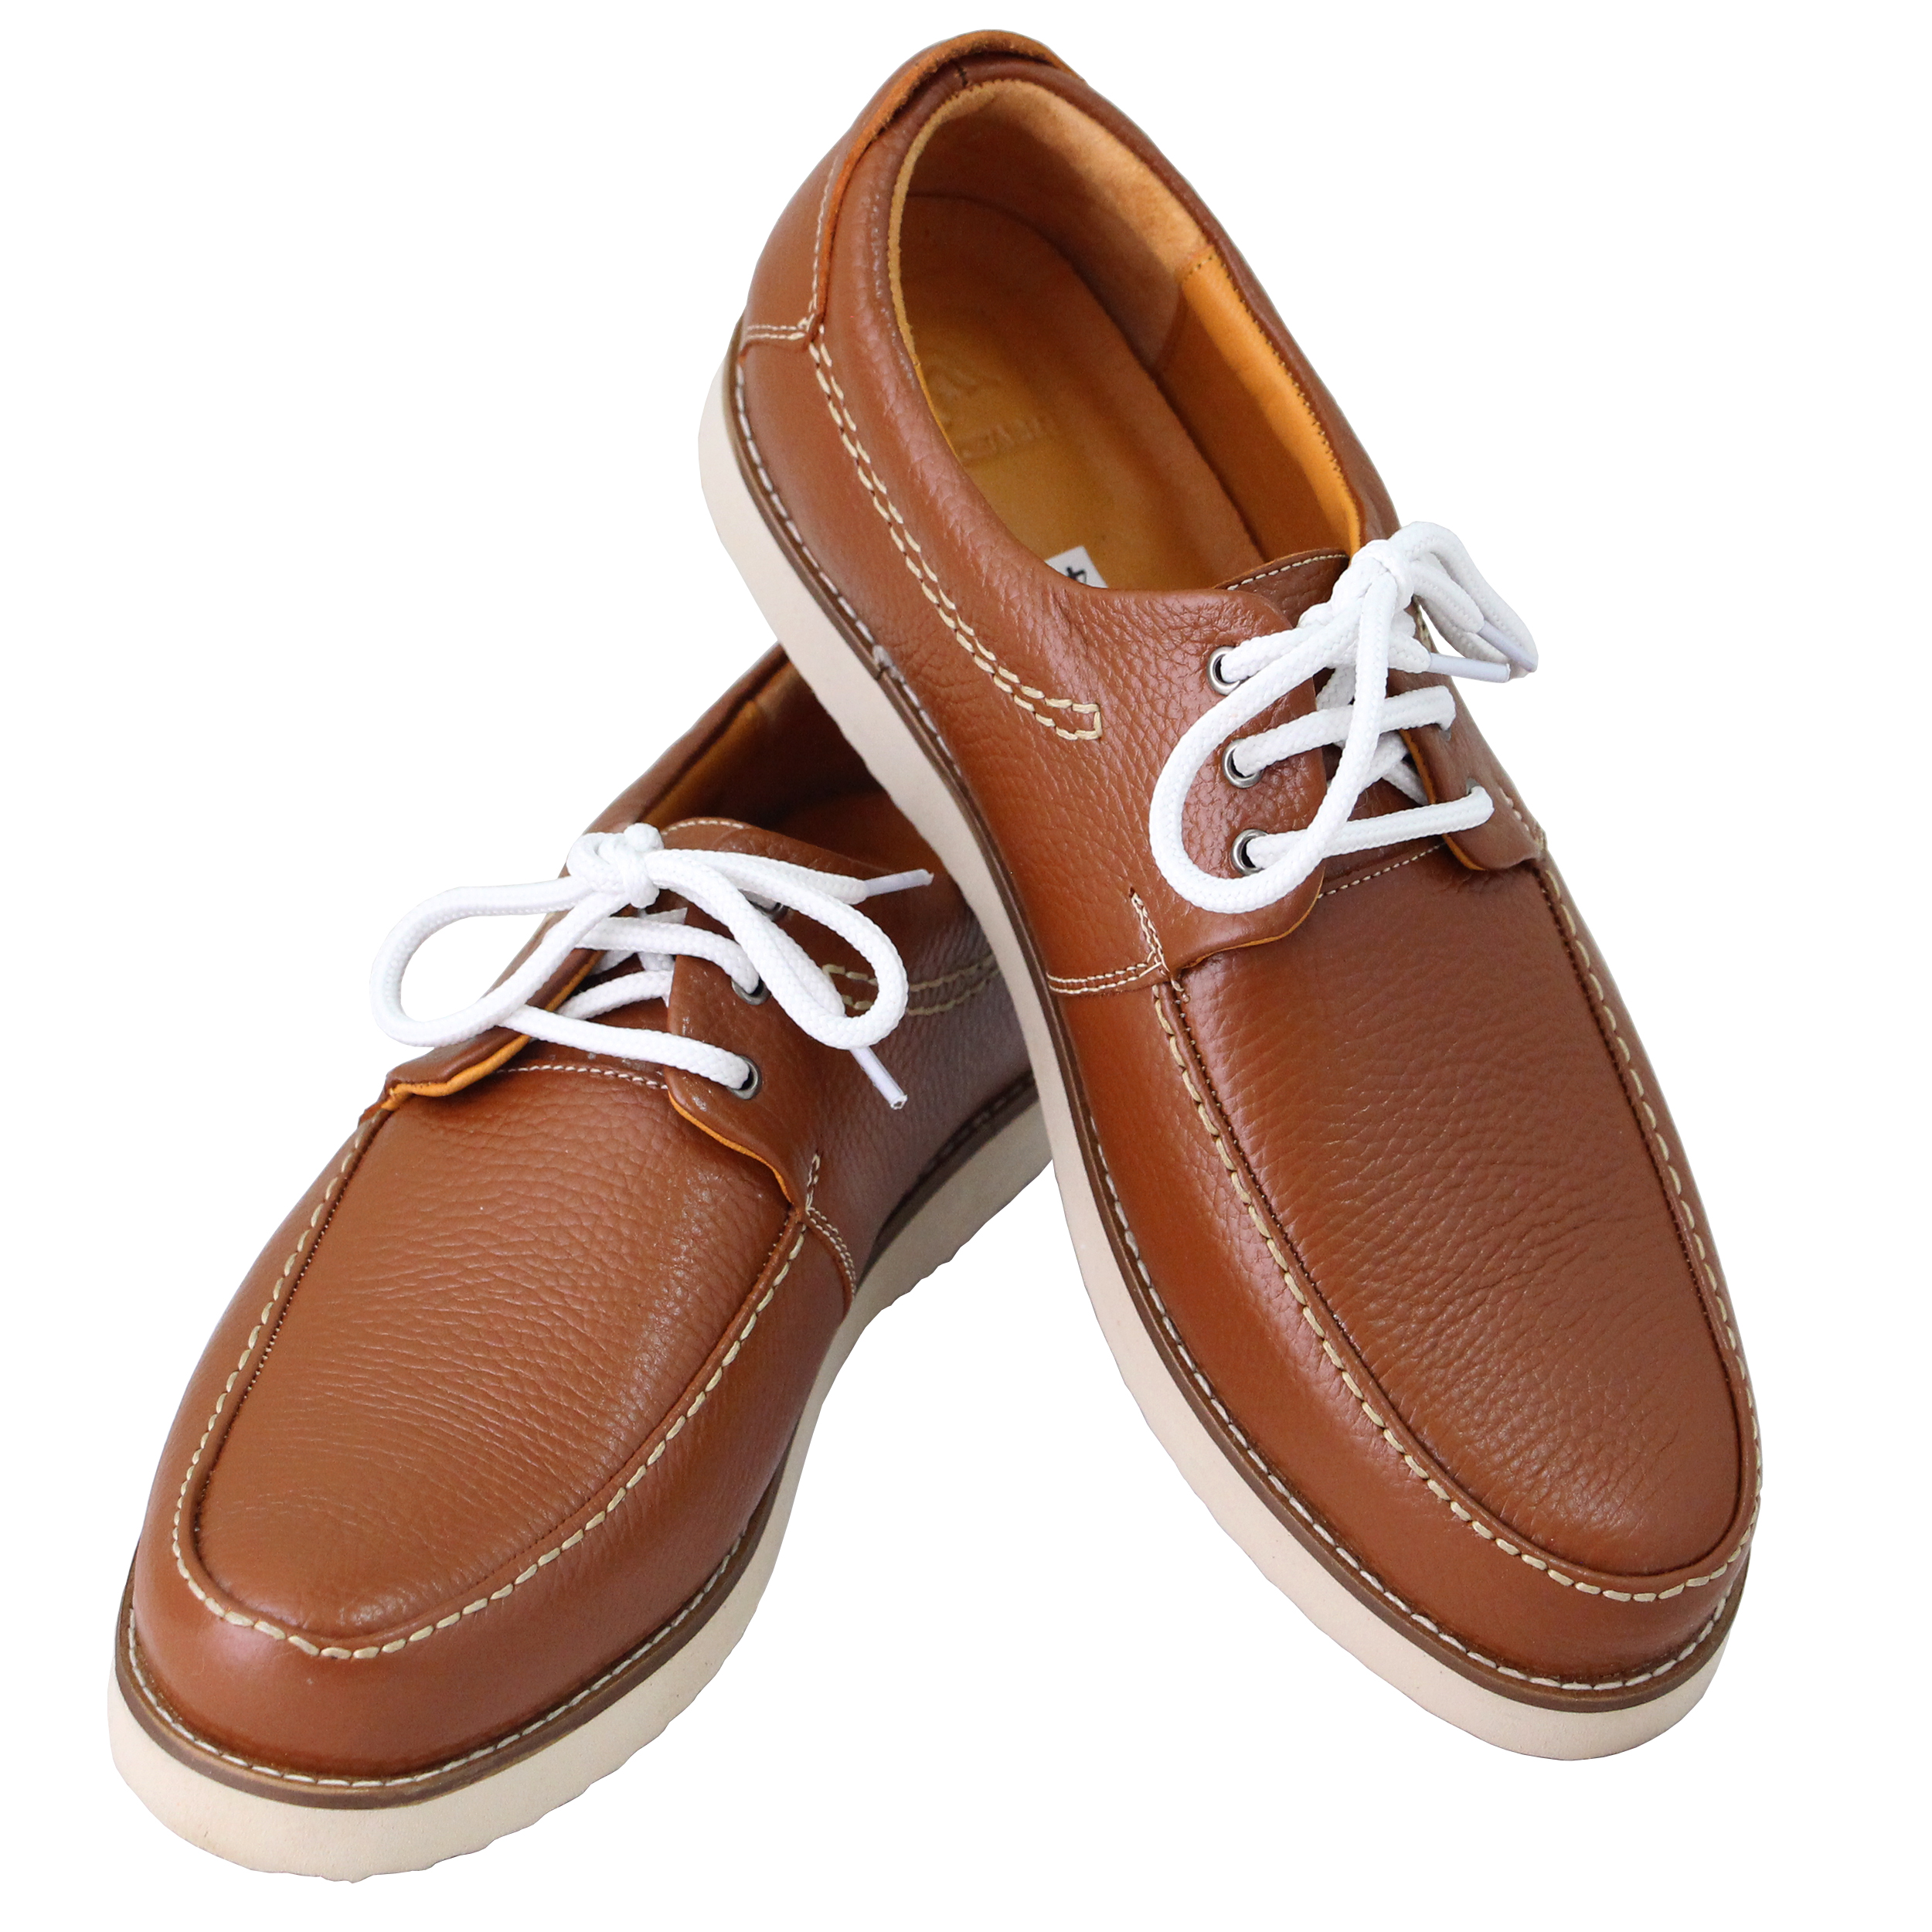 ADINCHARM leather men's casual shoes, DK101.as Model